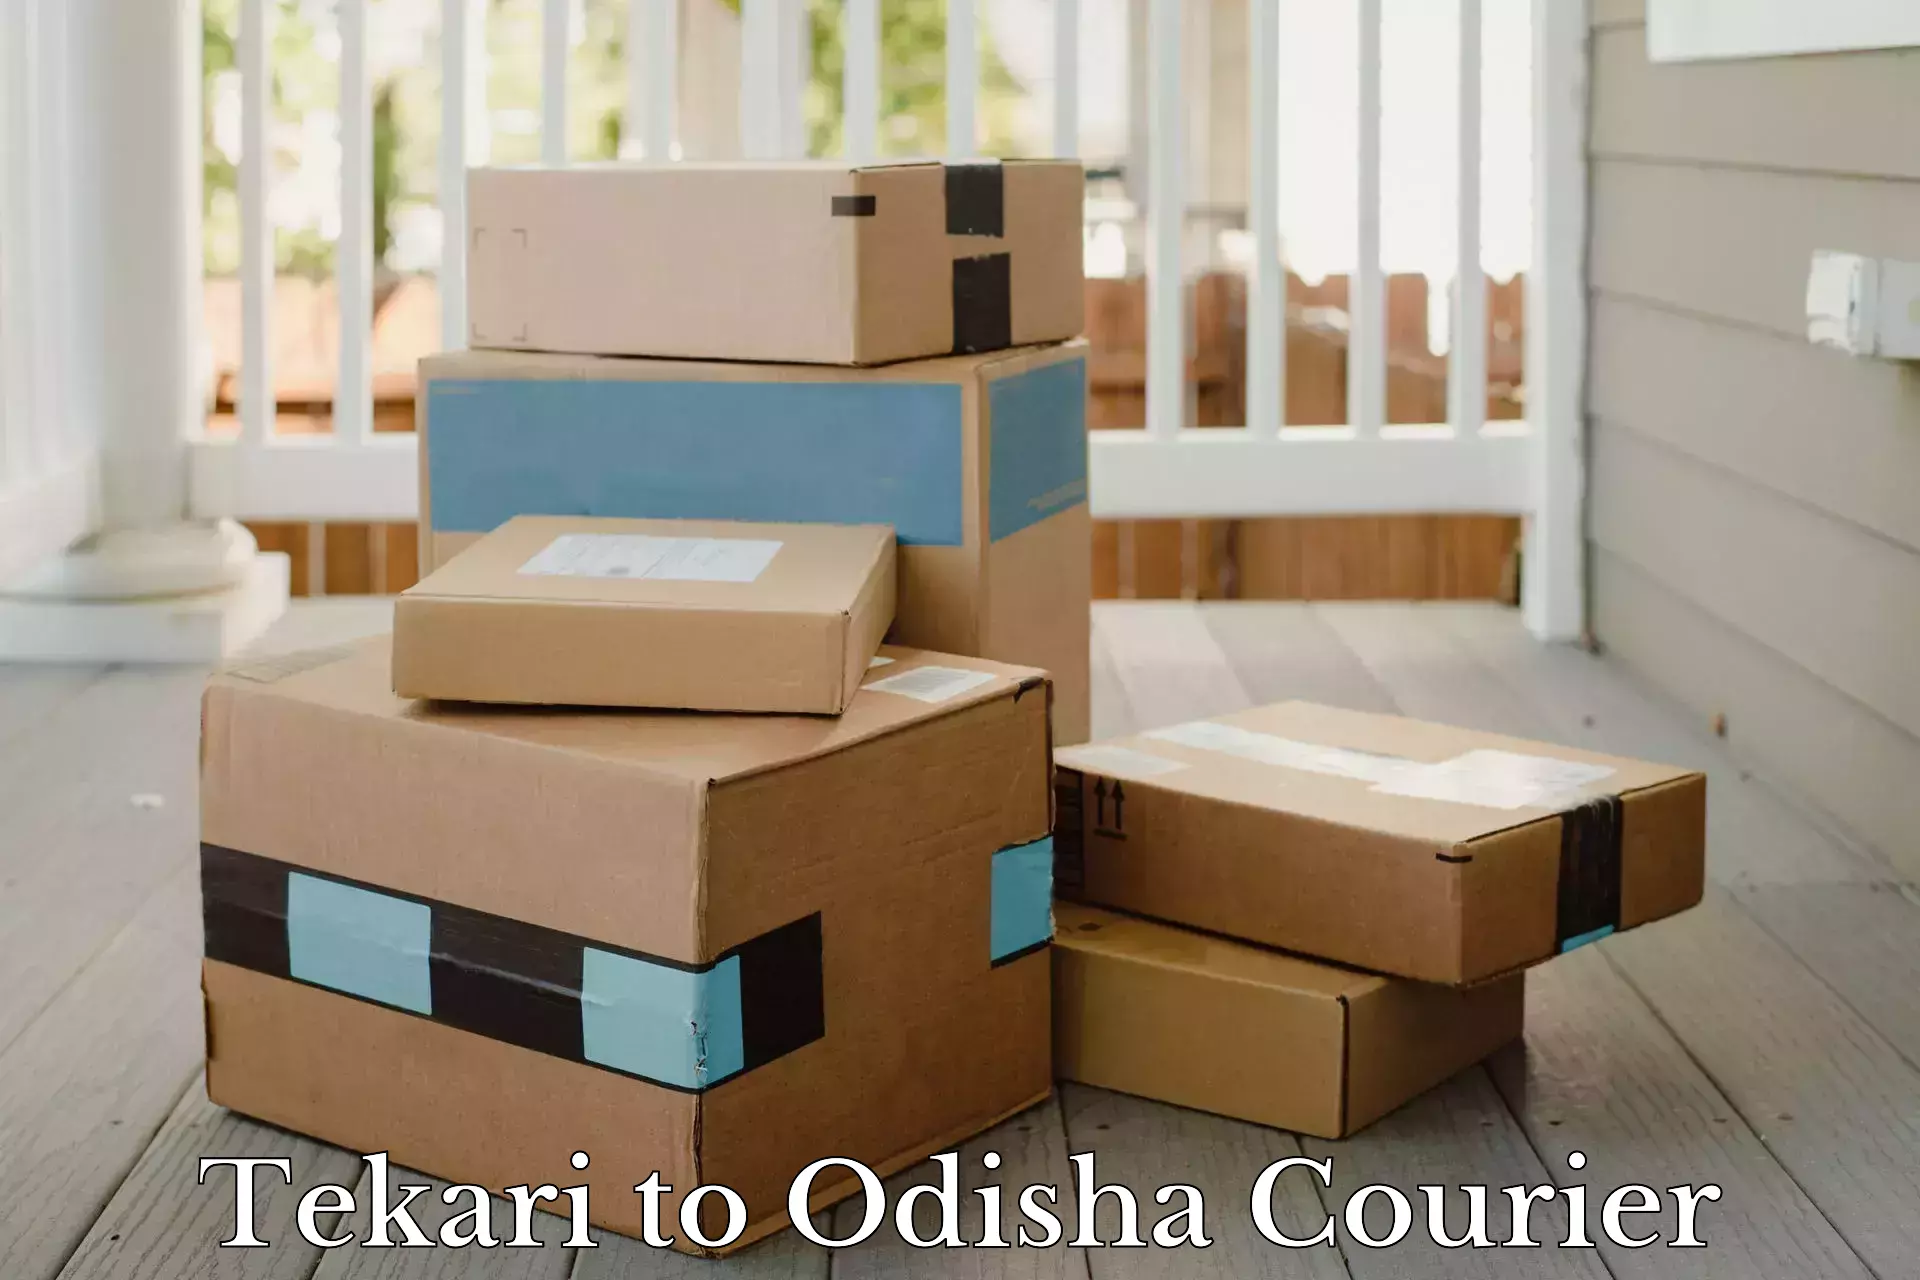 Full-service courier options Tekari to Dandisahi